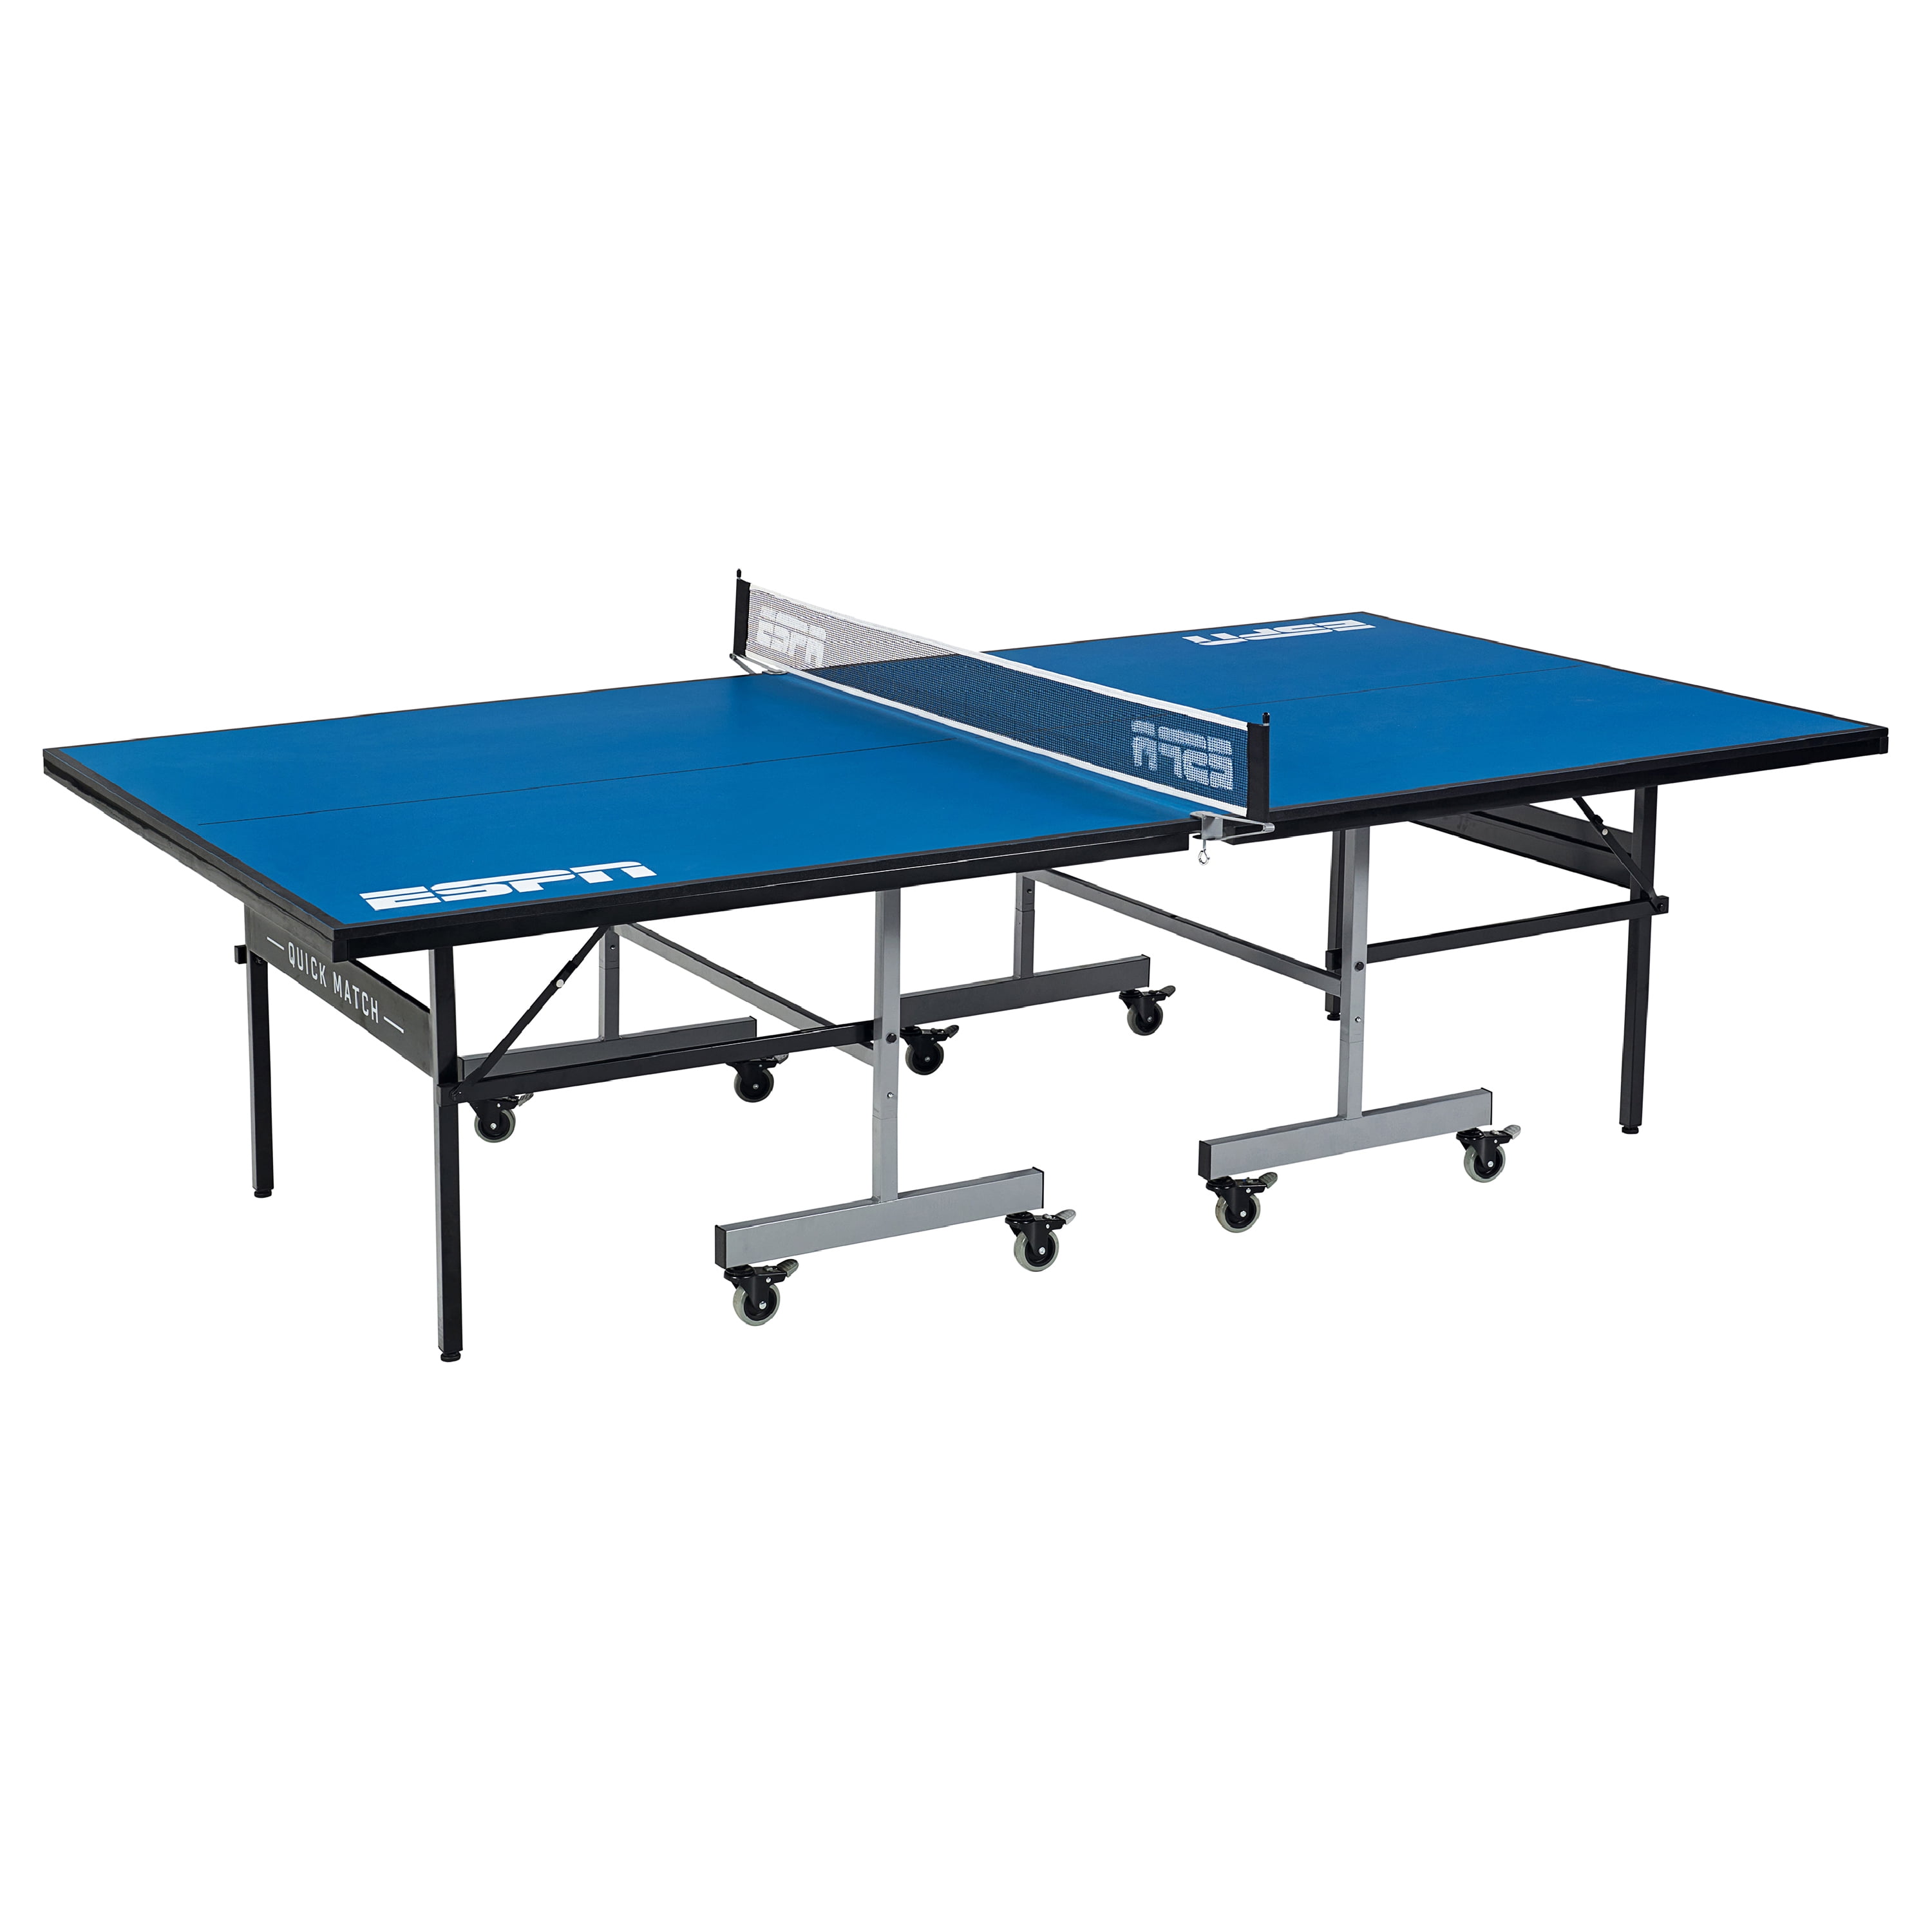 Desear Marcado implicar ESPN Official Size 2 Piece 15mm Indoor Quick Match Table Tennis Table, Blue  - Walmart.com